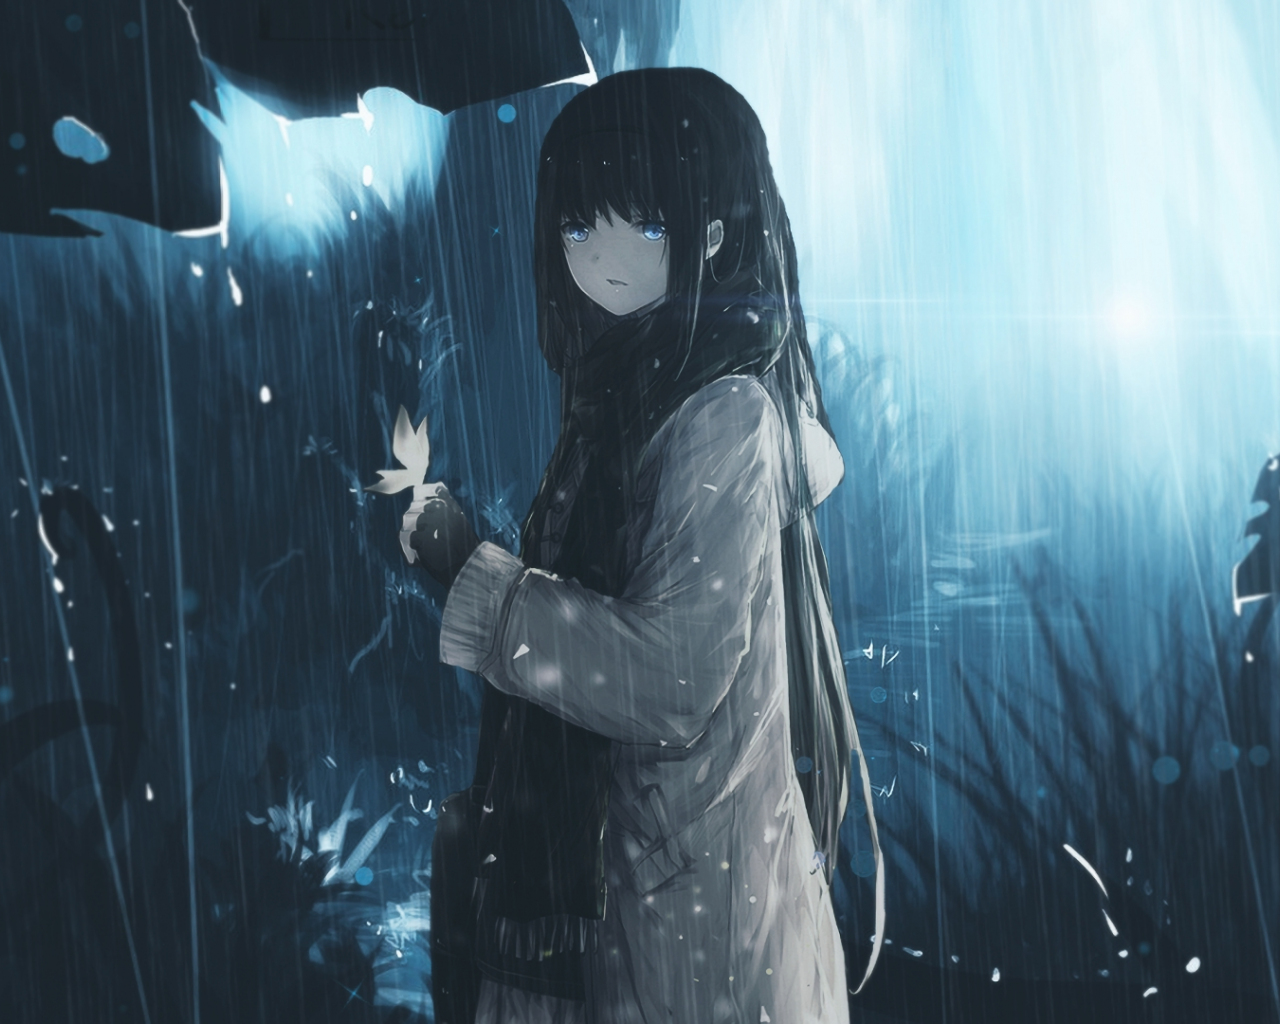 Download 1280x1024 Wallpaper Blue Eye Anime Girl, Long Hair, Rain,  Original, Standard 5:4, Fullscreen, 1280x1024 Hd Image, Background, 17678